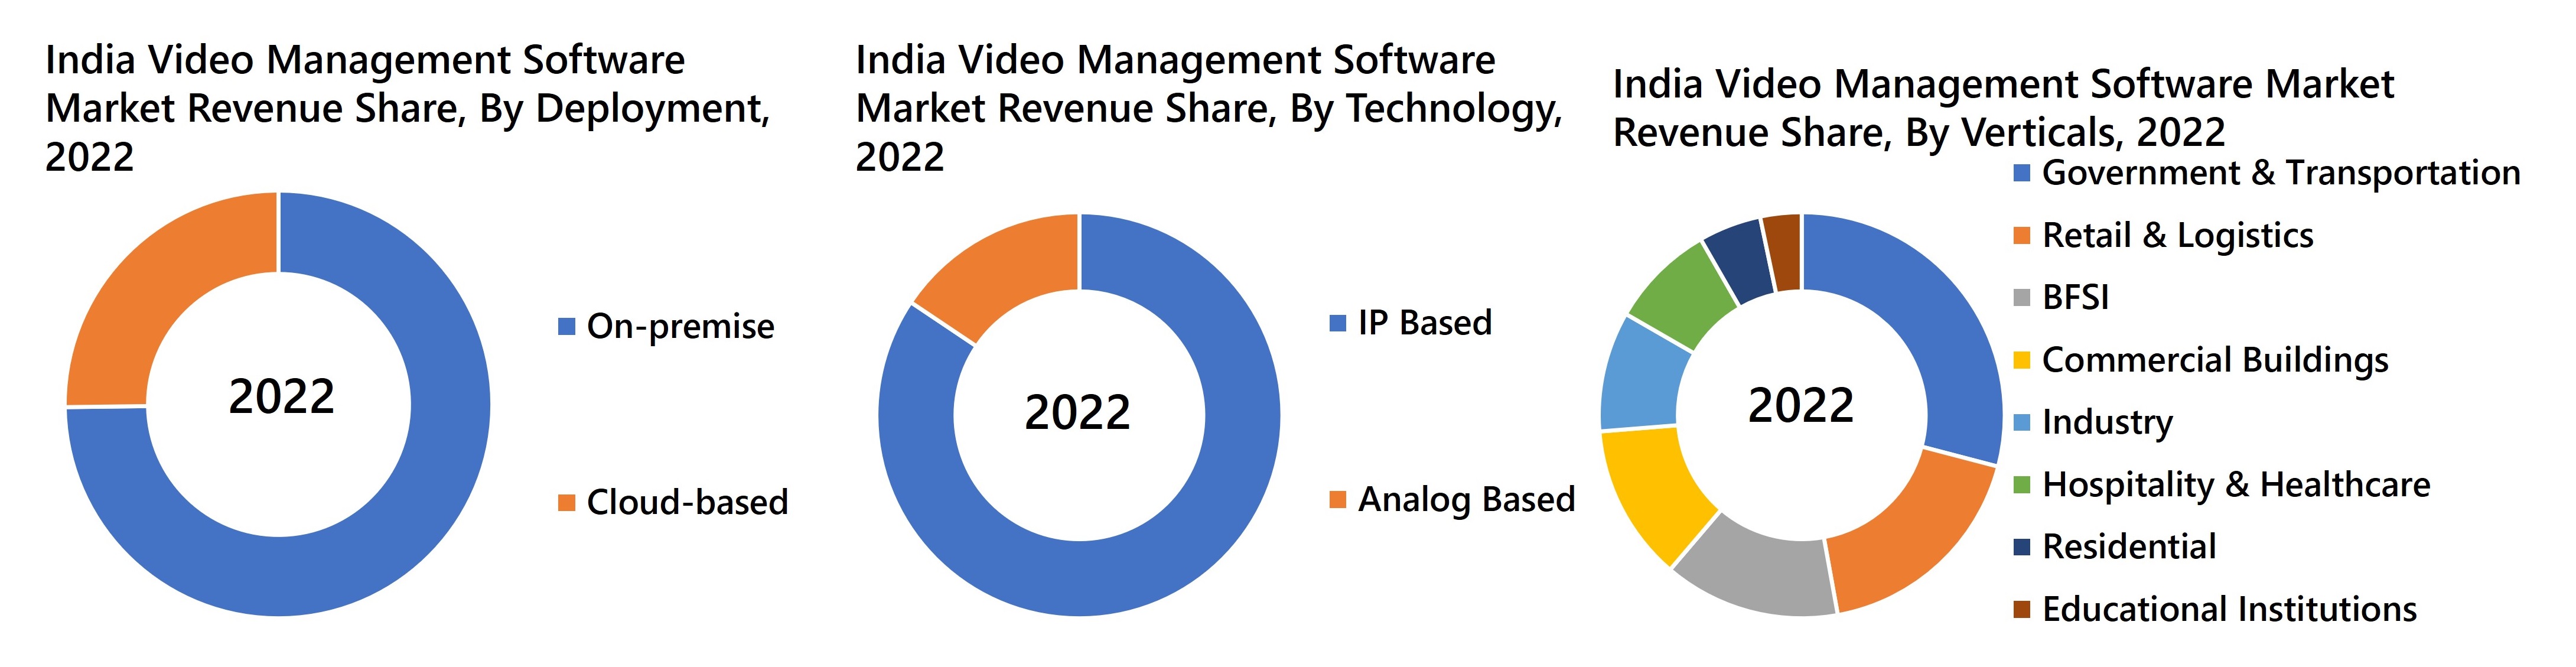 India Video Management Software Market Revenue Share